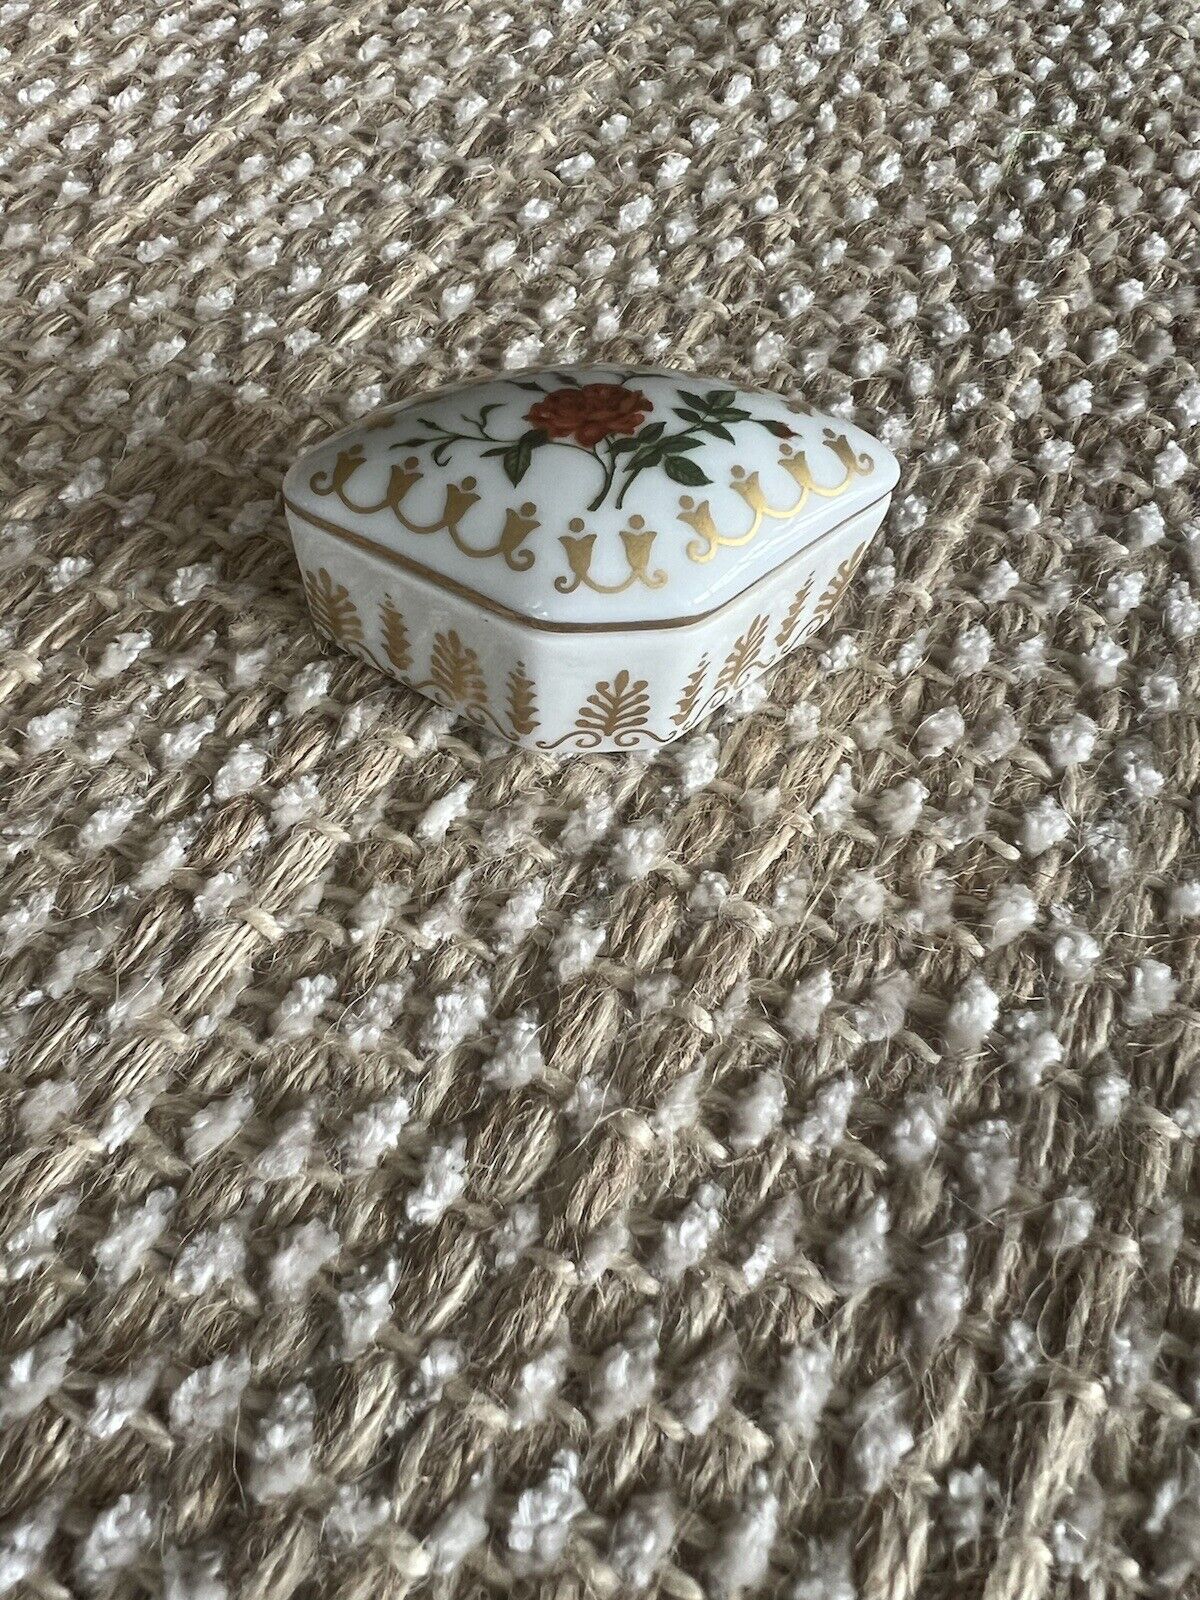 Empress Josephine’s Rose Garden Trinket Box, Porcelain